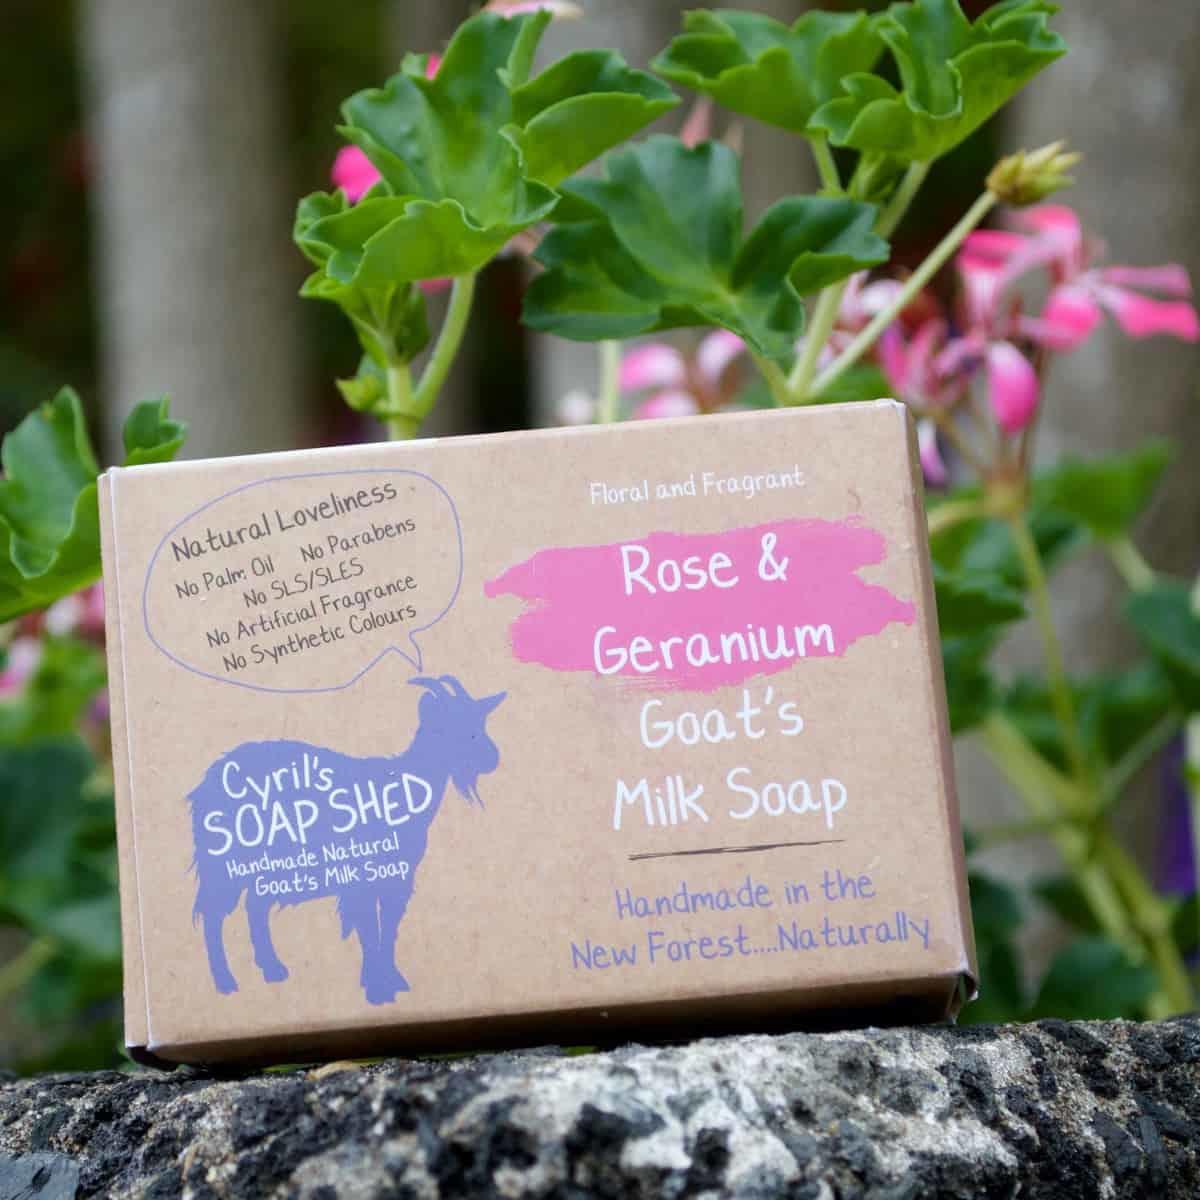 Rose and Geranium natural, handmade Goats milk soap image 1